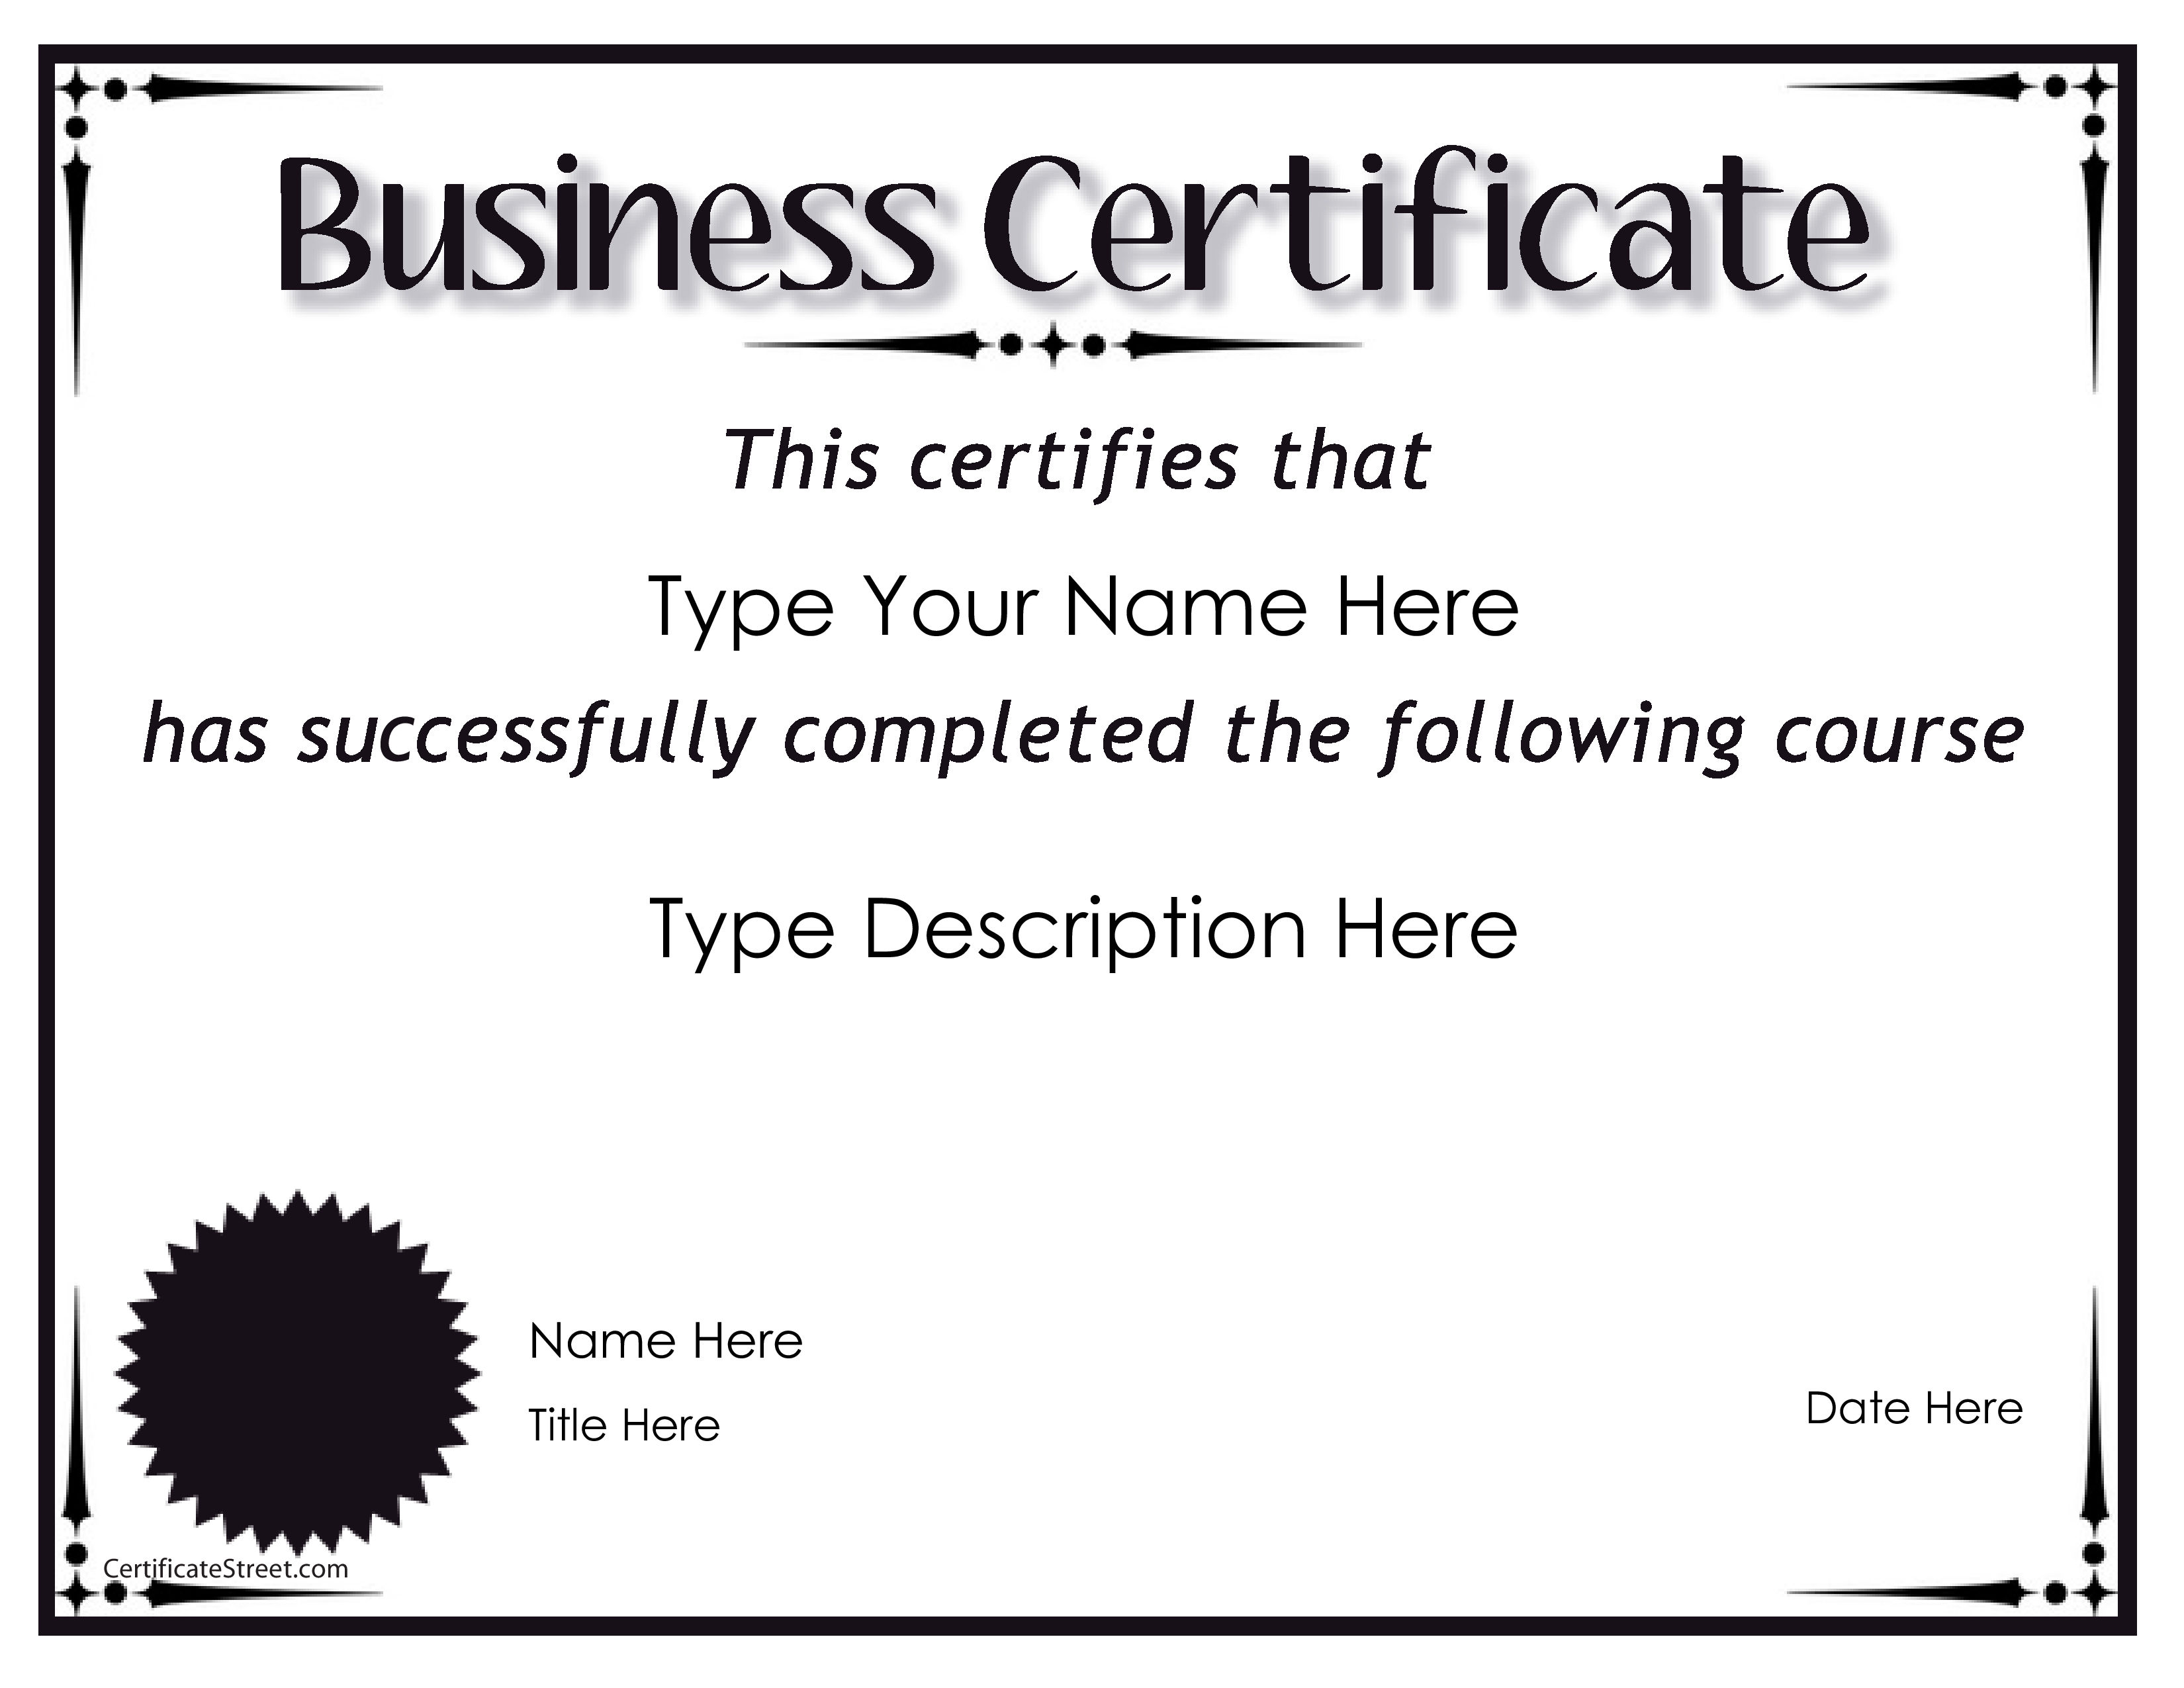 business certificate plantilla imagen principal